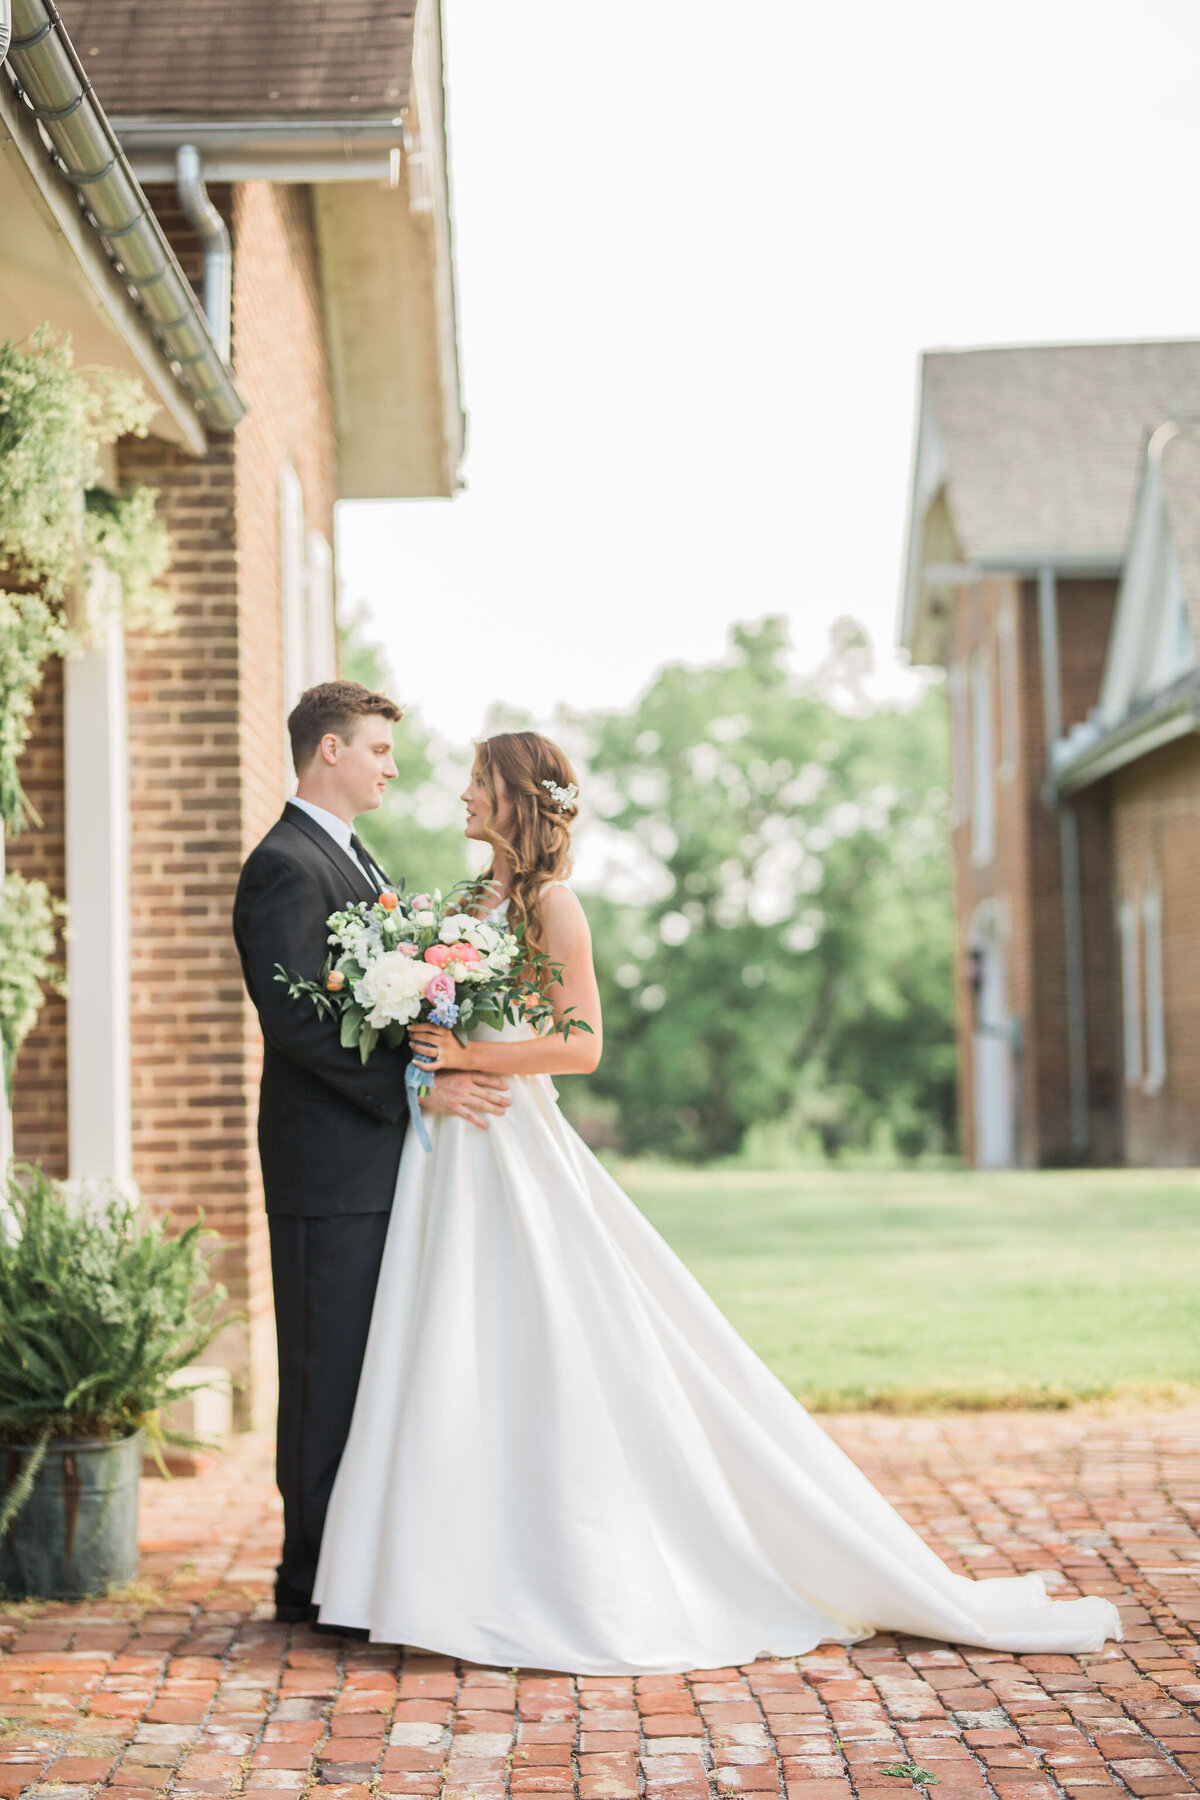 Lynwood Estate - Luxury Kentucky Wedding Venue - Styled Shoot 00003